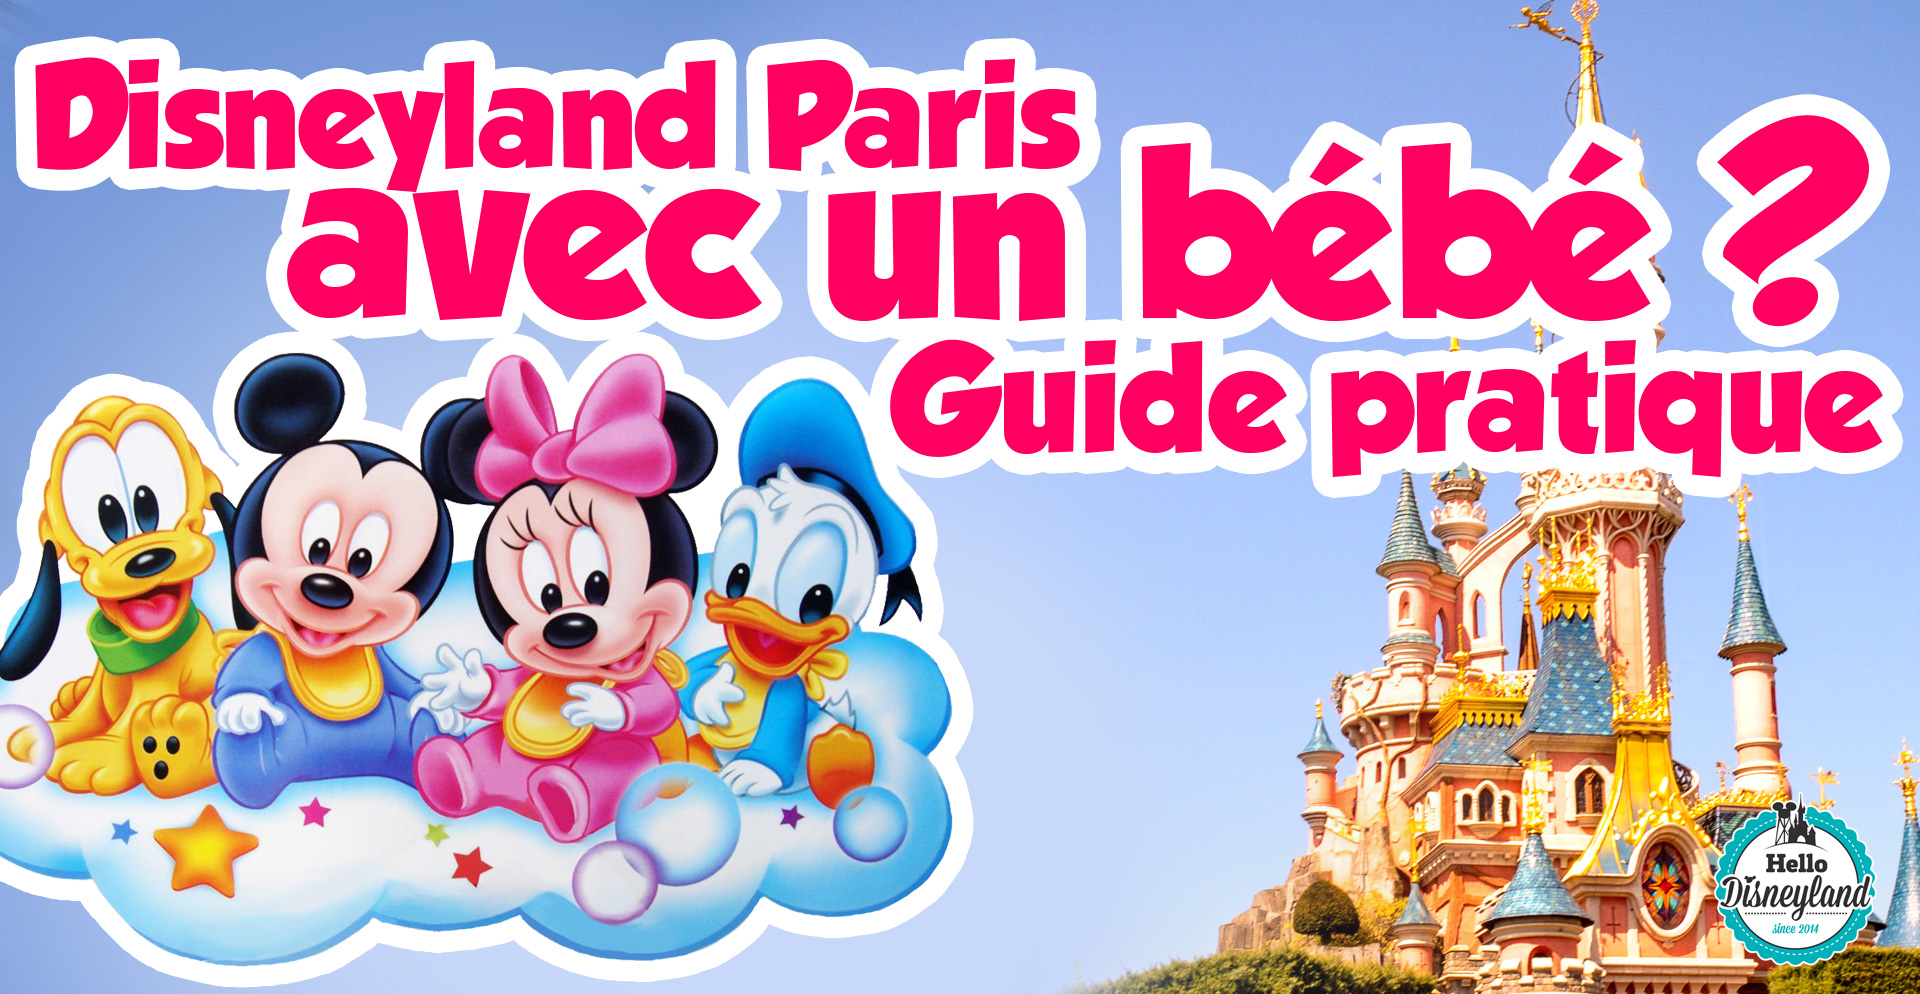 Disneyland Paris Avec Un Bebe Infos Pratiques Hello Disneyland